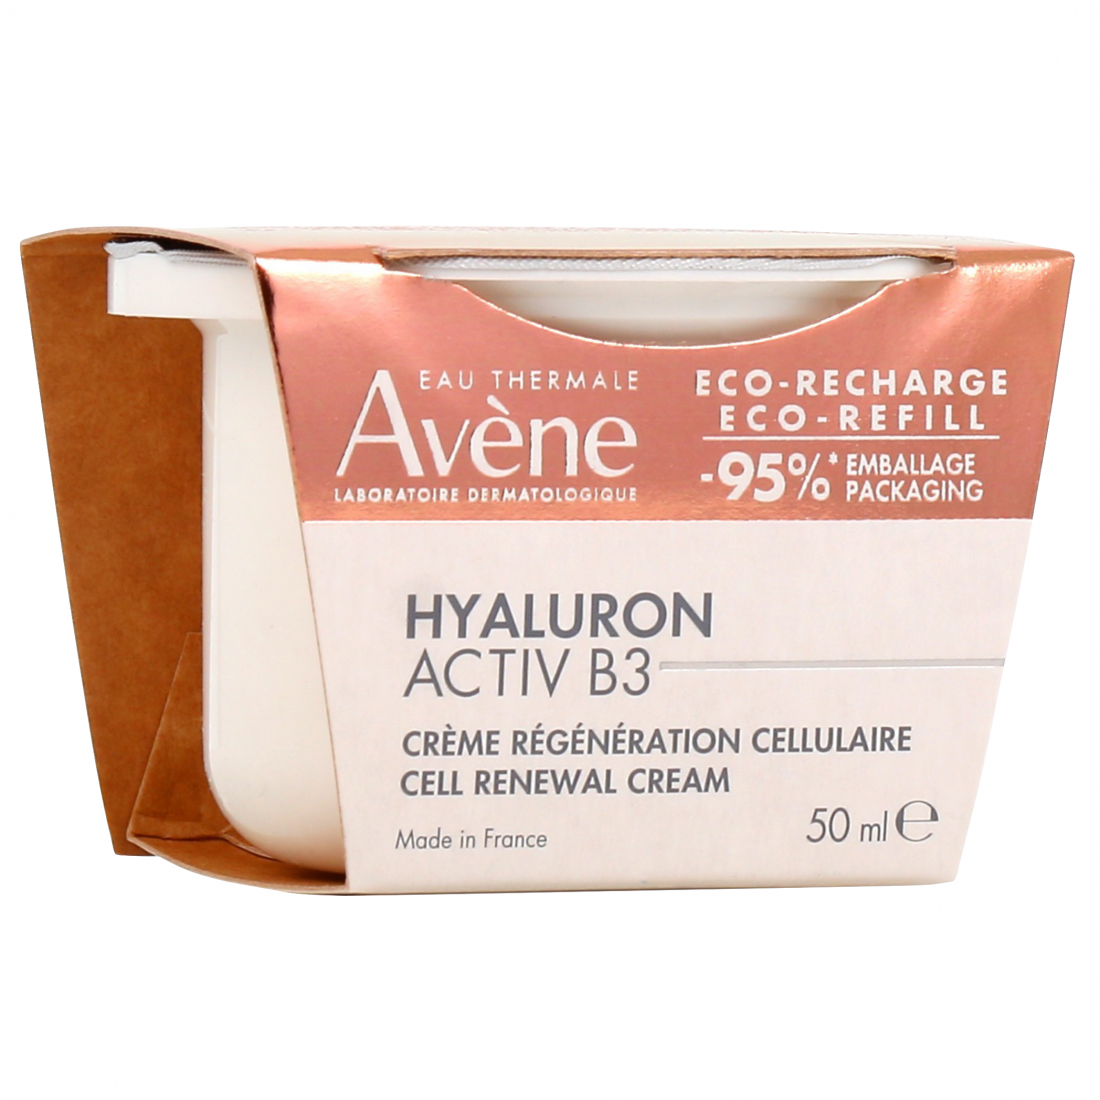 HYALURON ACTIV B3 acqua-gel crema rinnovamento cellulare ricarica 50 ml